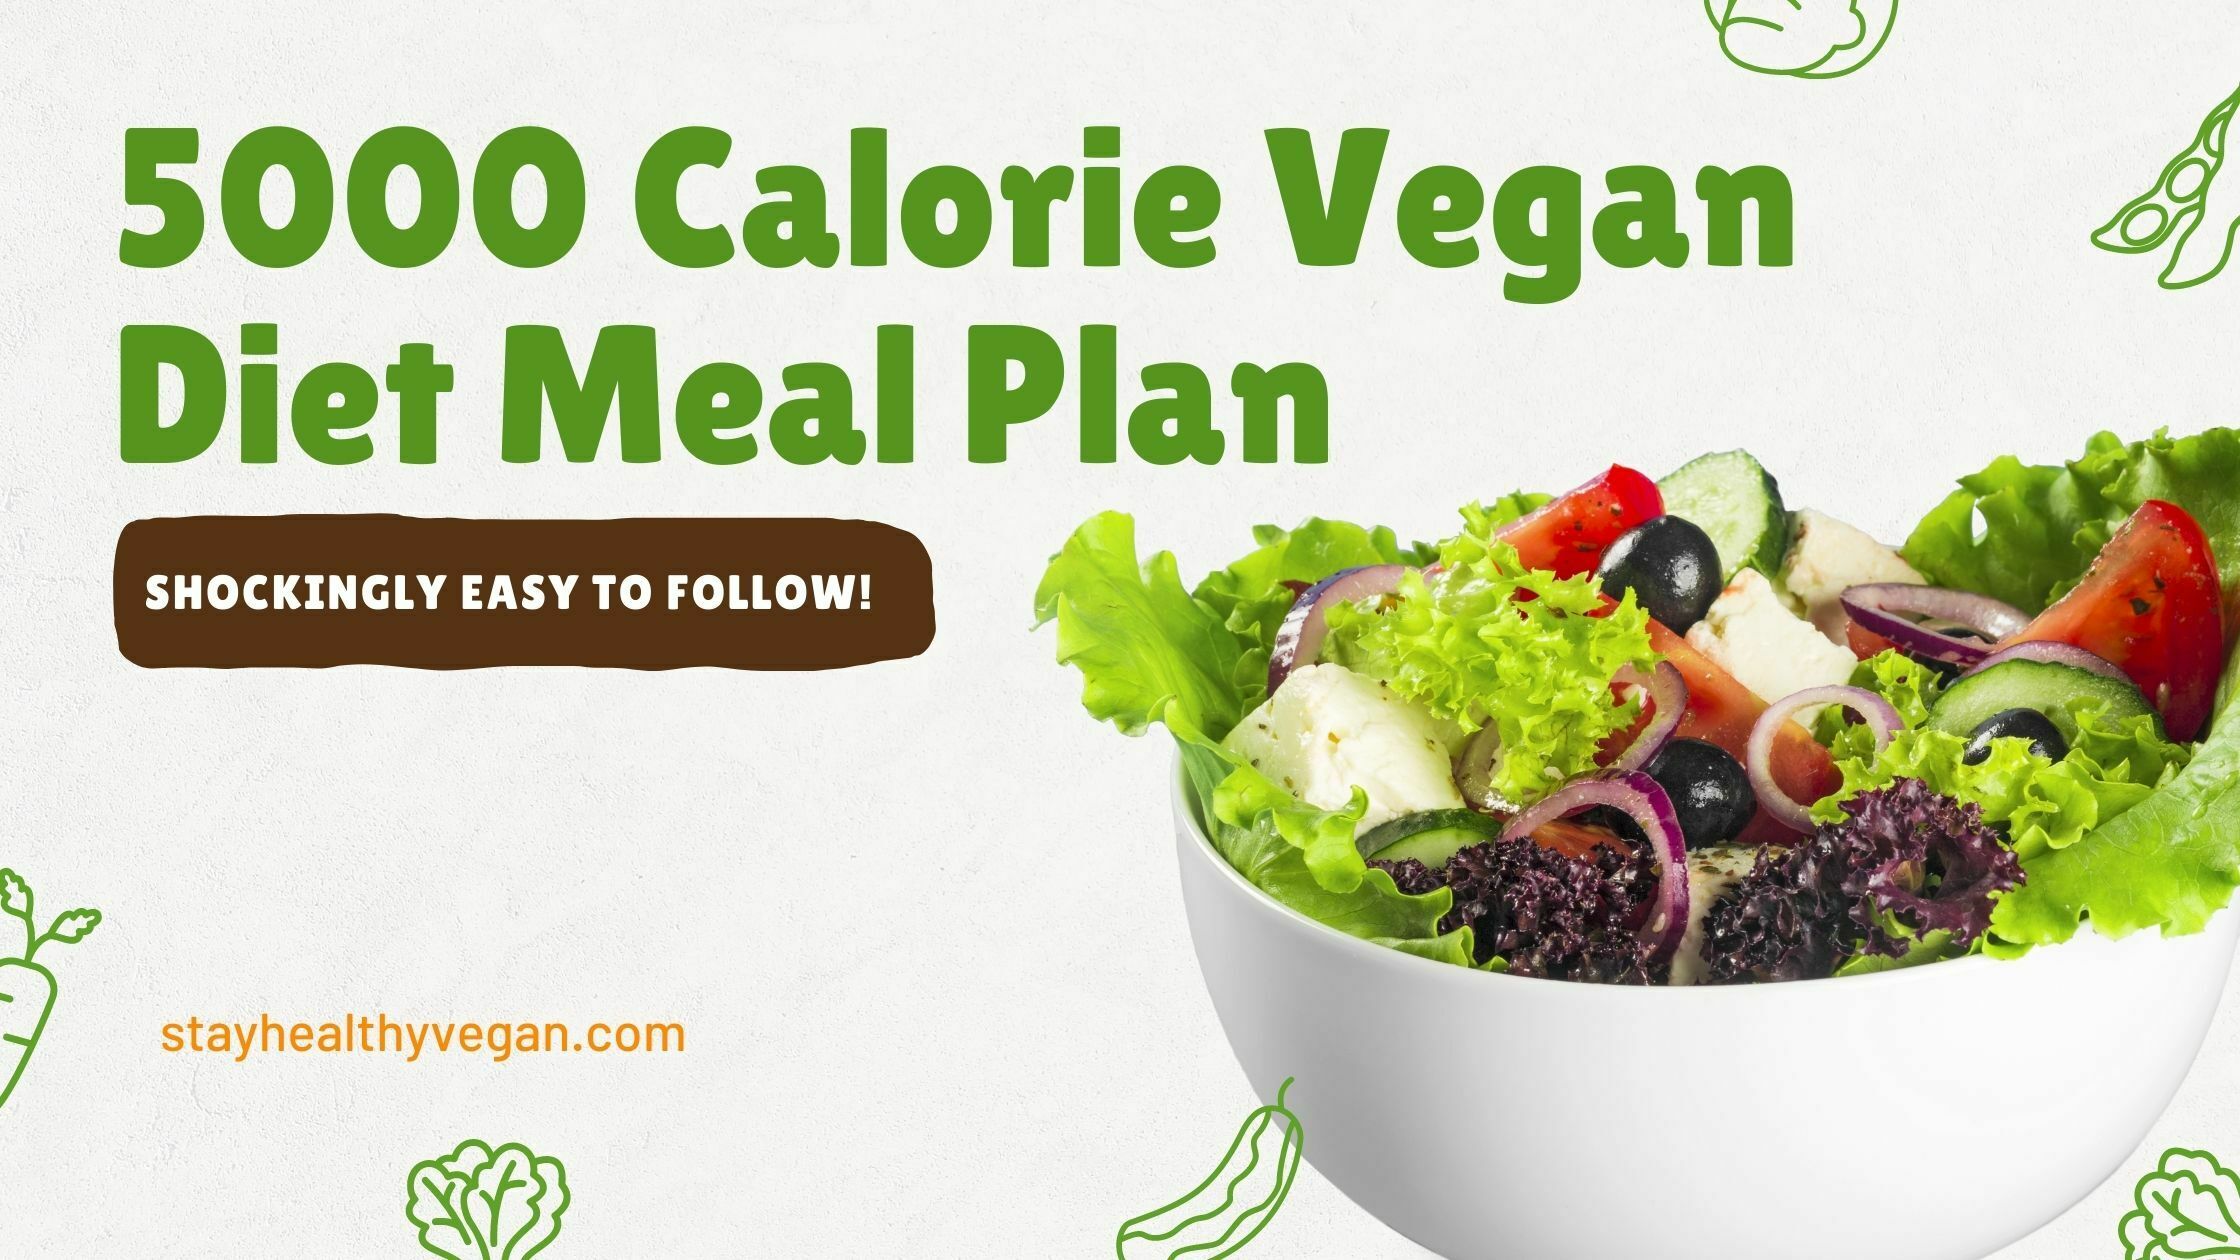 5000 Calorie Vegan Diet